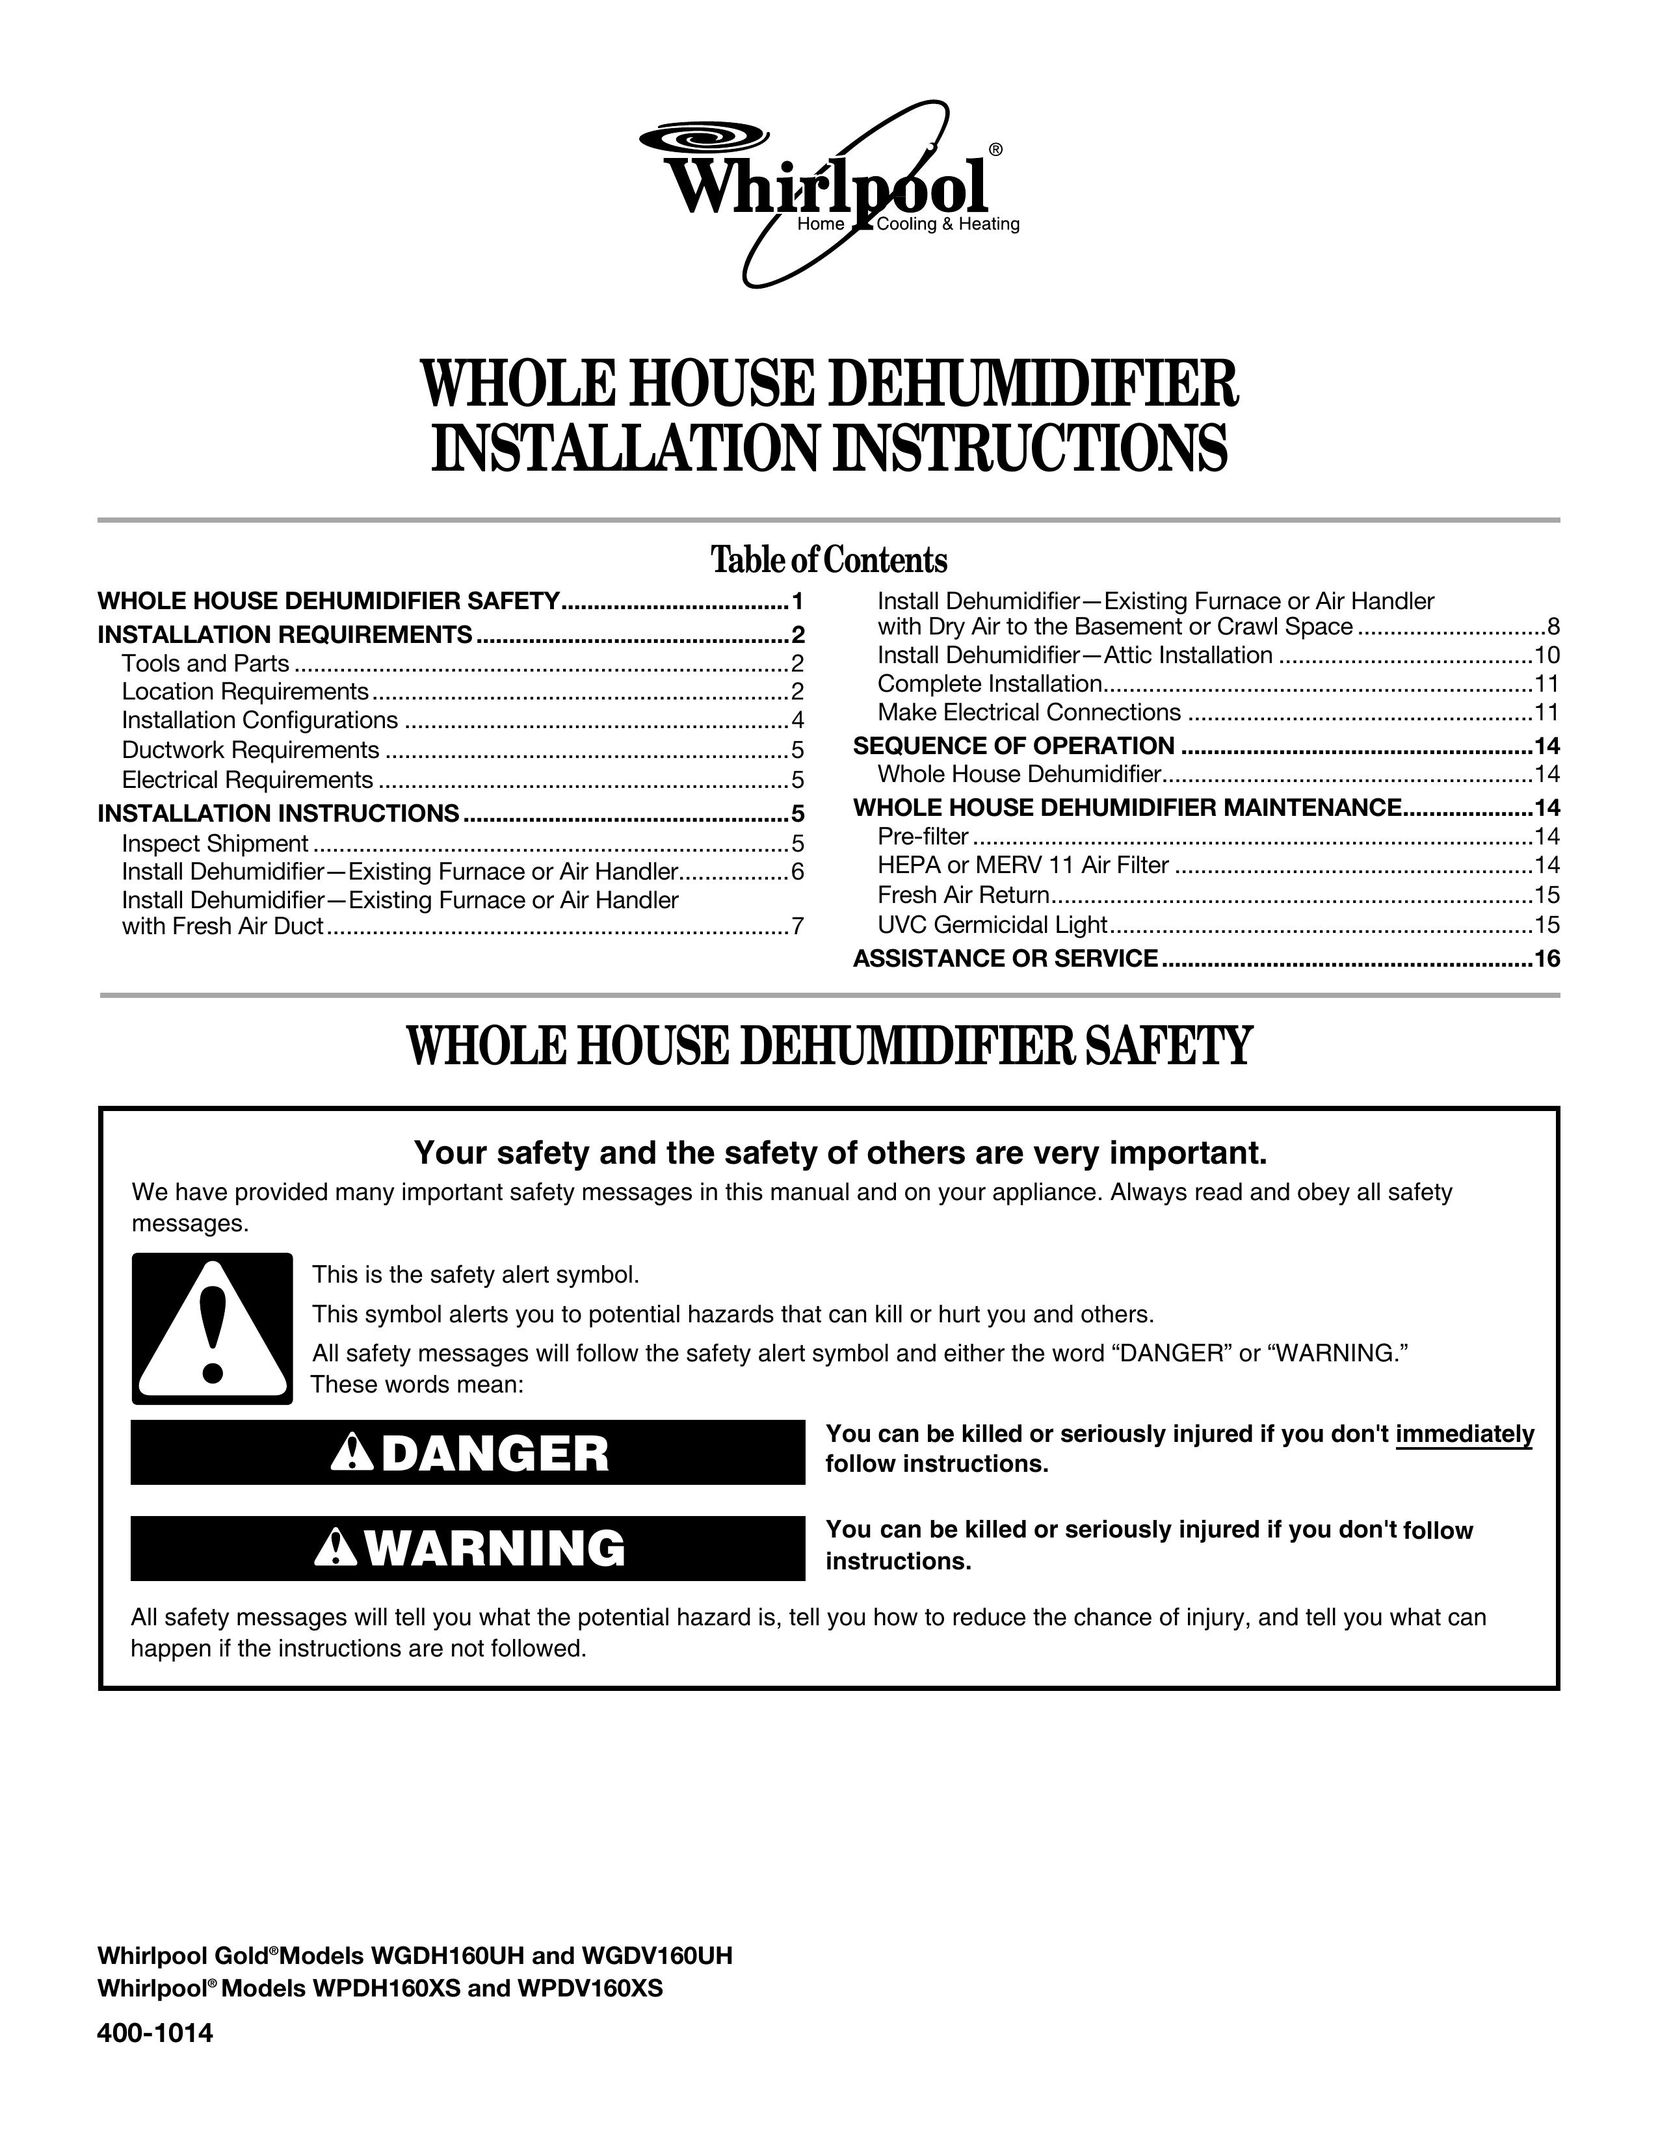 Whirlpool WGDV160UH Dehumidifier User Manual